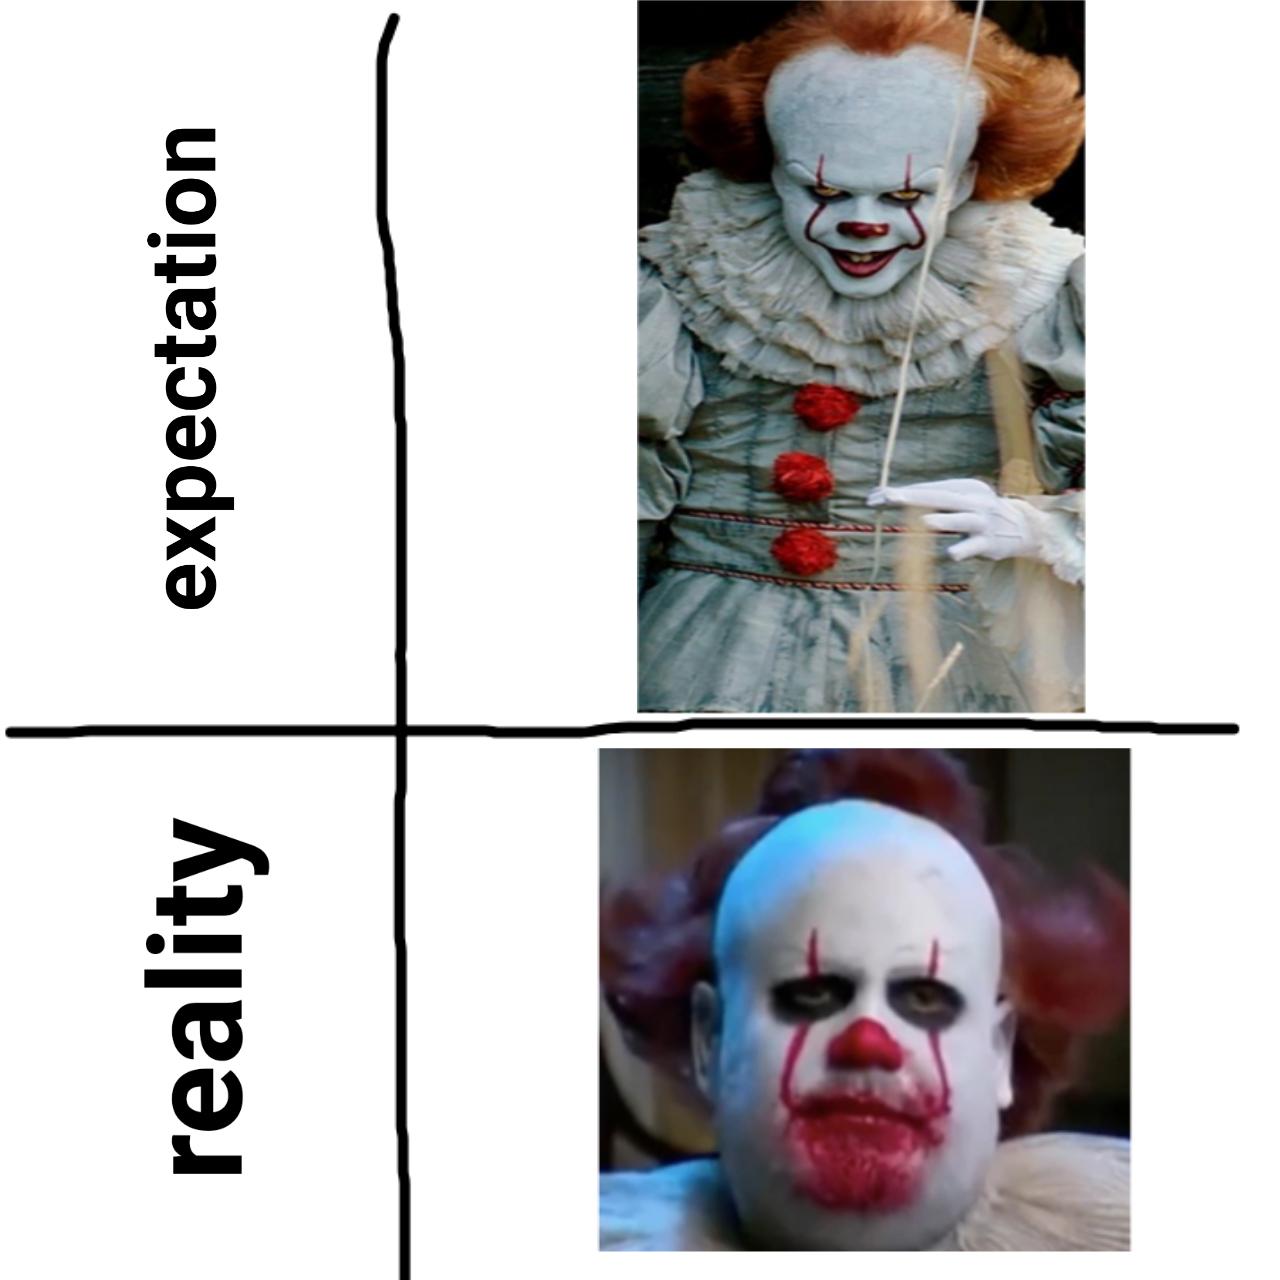 clown - reality expectation